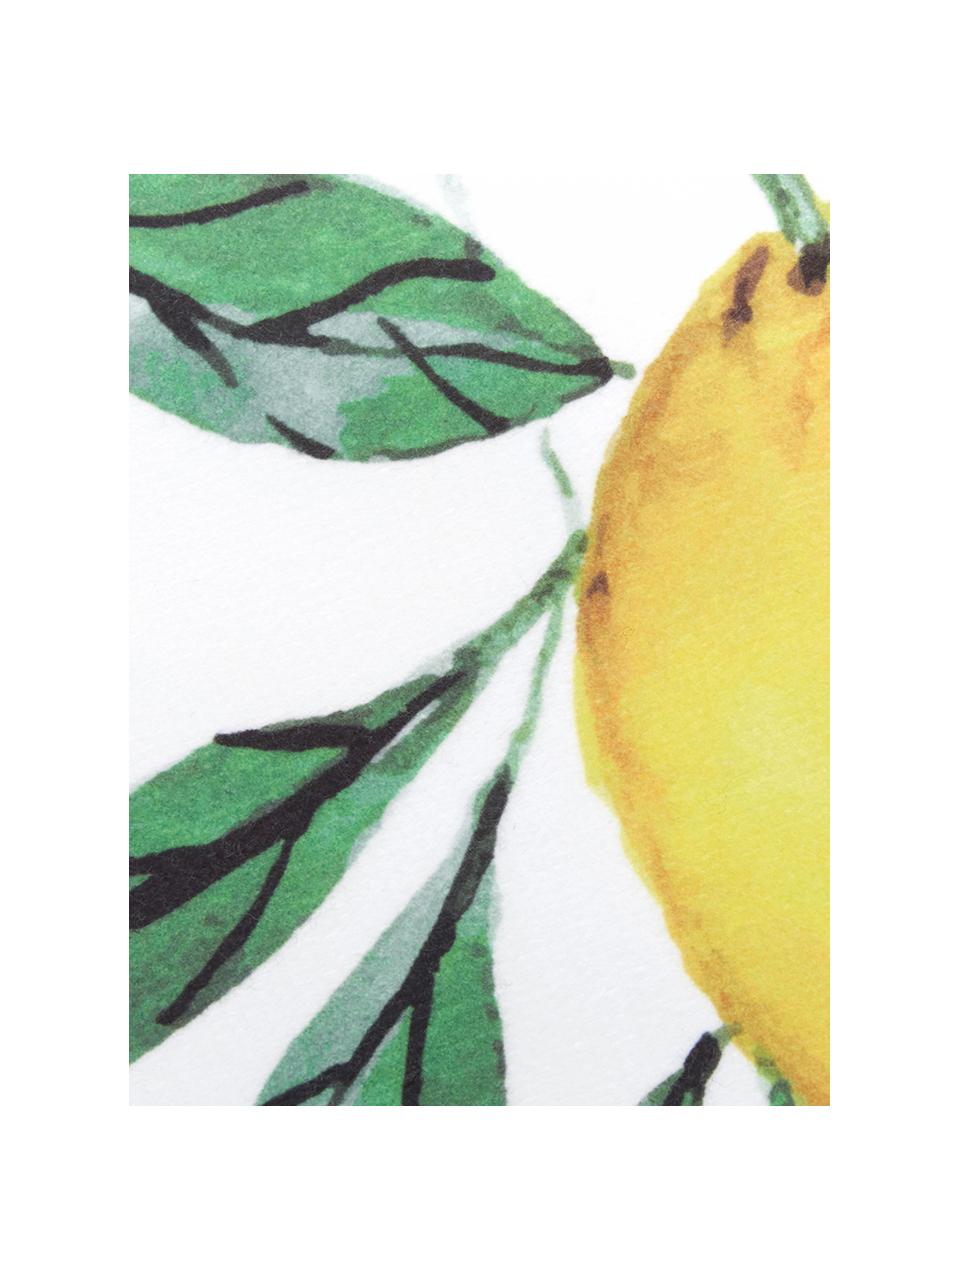 Licht strandlaken Lemon met citroenenprint, 55% polyester, 45% katoen zeer lichte kwaliteit, 340 g/m², Wit, groen, geel, B 70 x L 150 cm